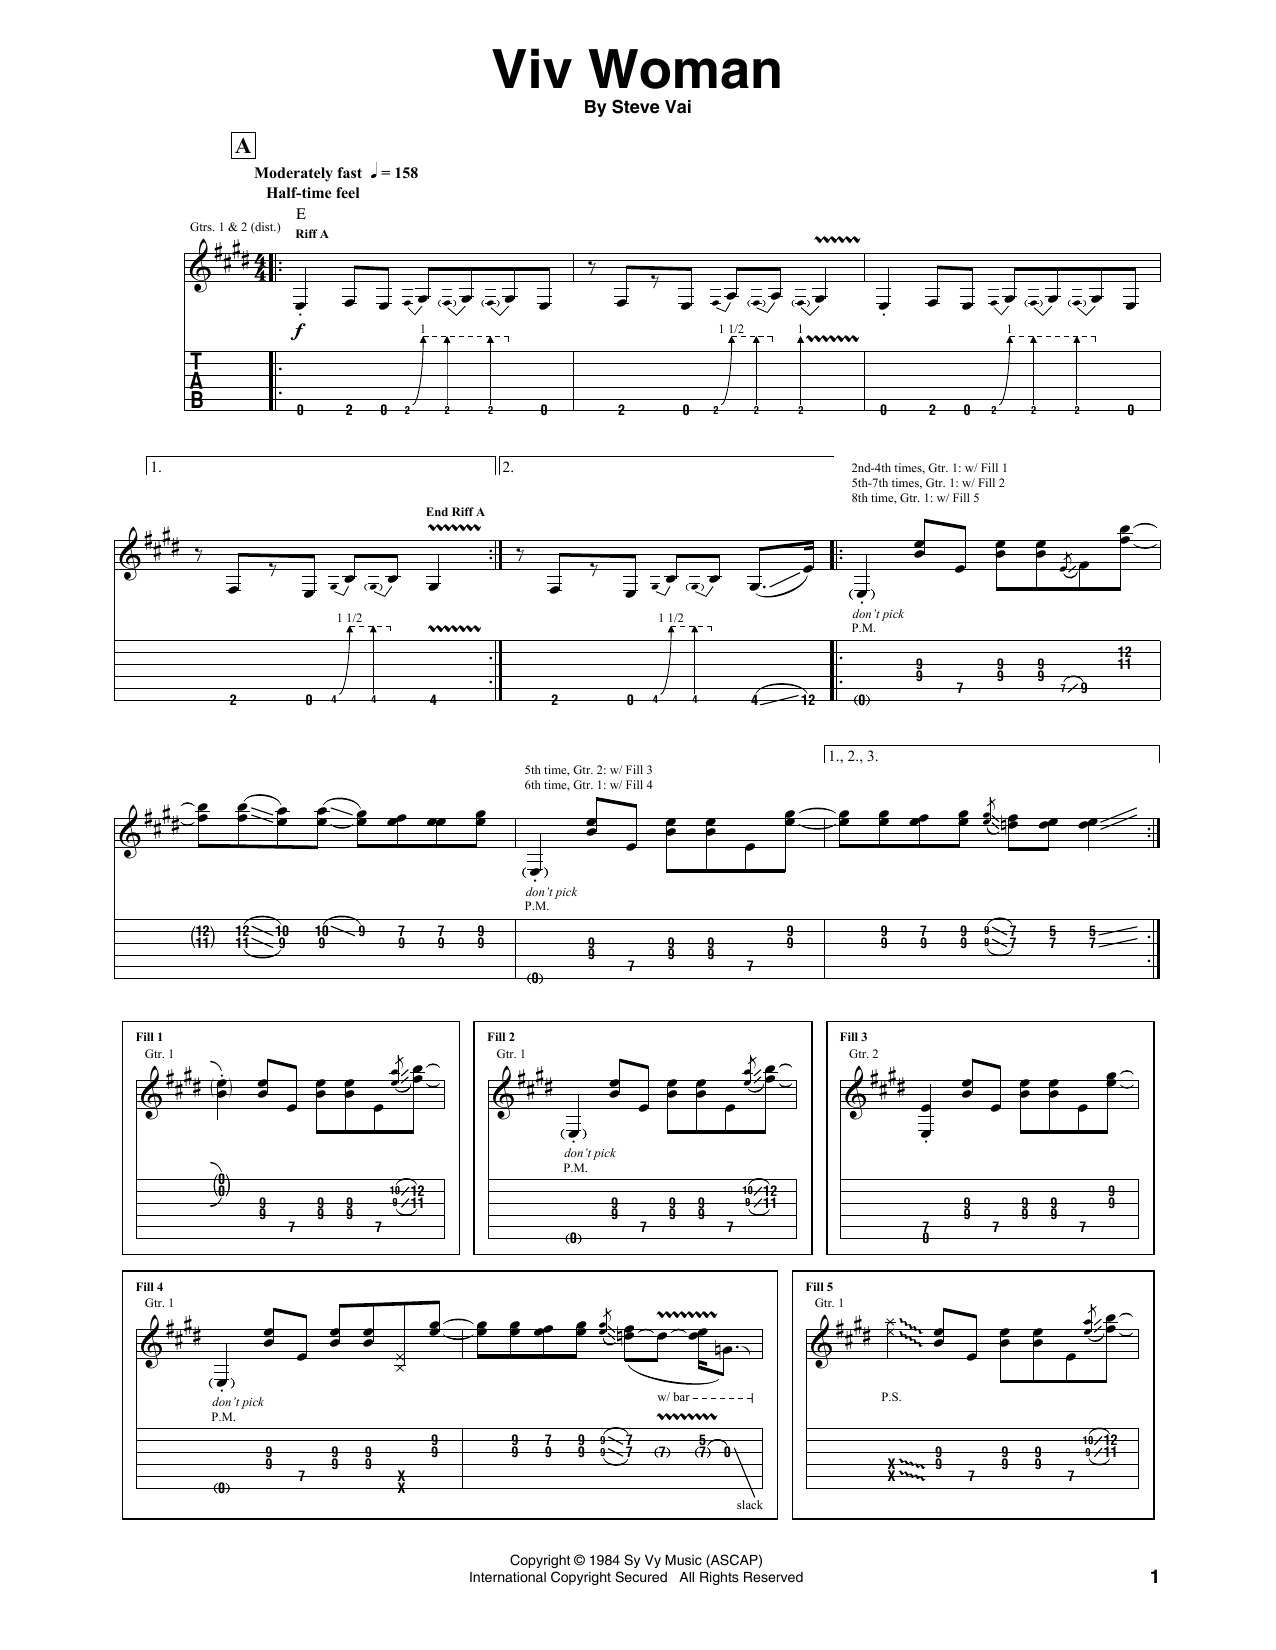 Steve Vai Viv Woman sheet music notes and chords arranged for Guitar Tab